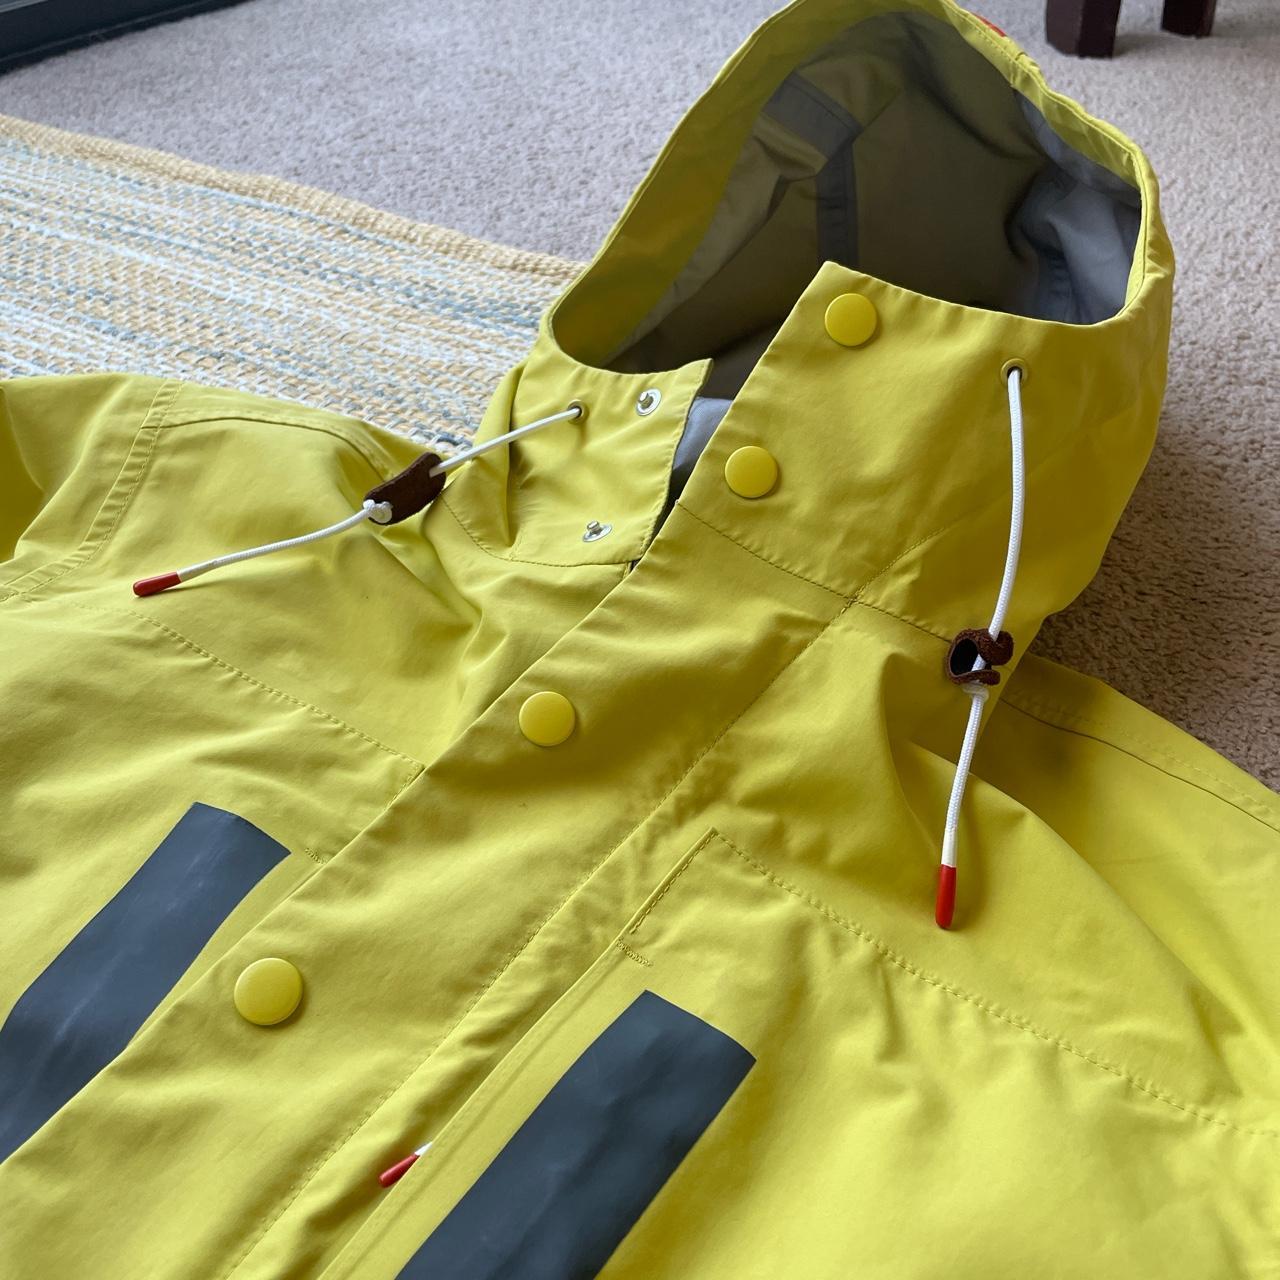 Product Image 2 - Poler Duck rain jacket
Simple, retro